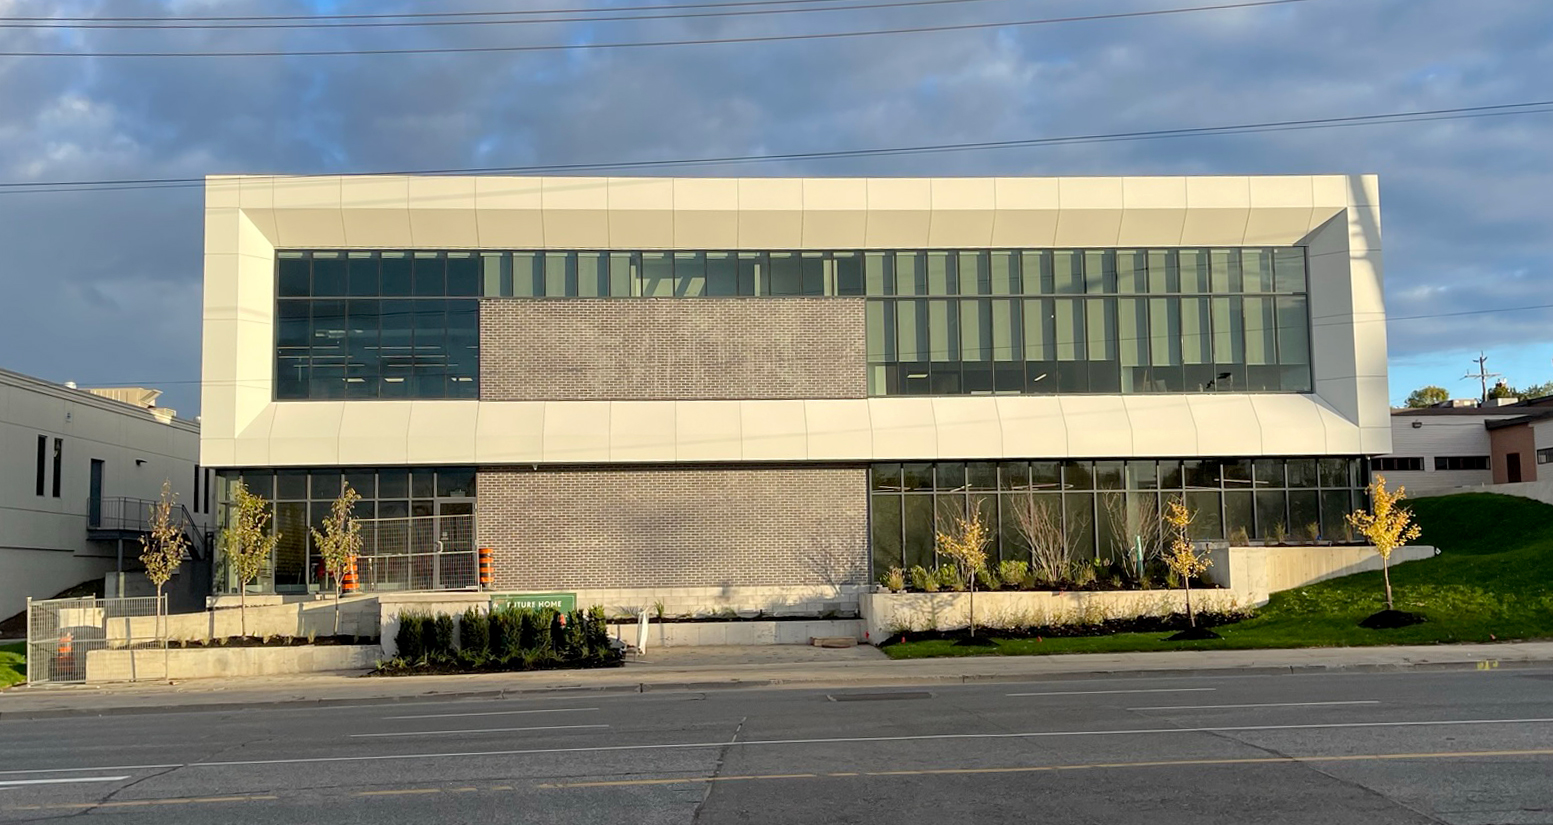 Exterior shot of the corporate headquarters